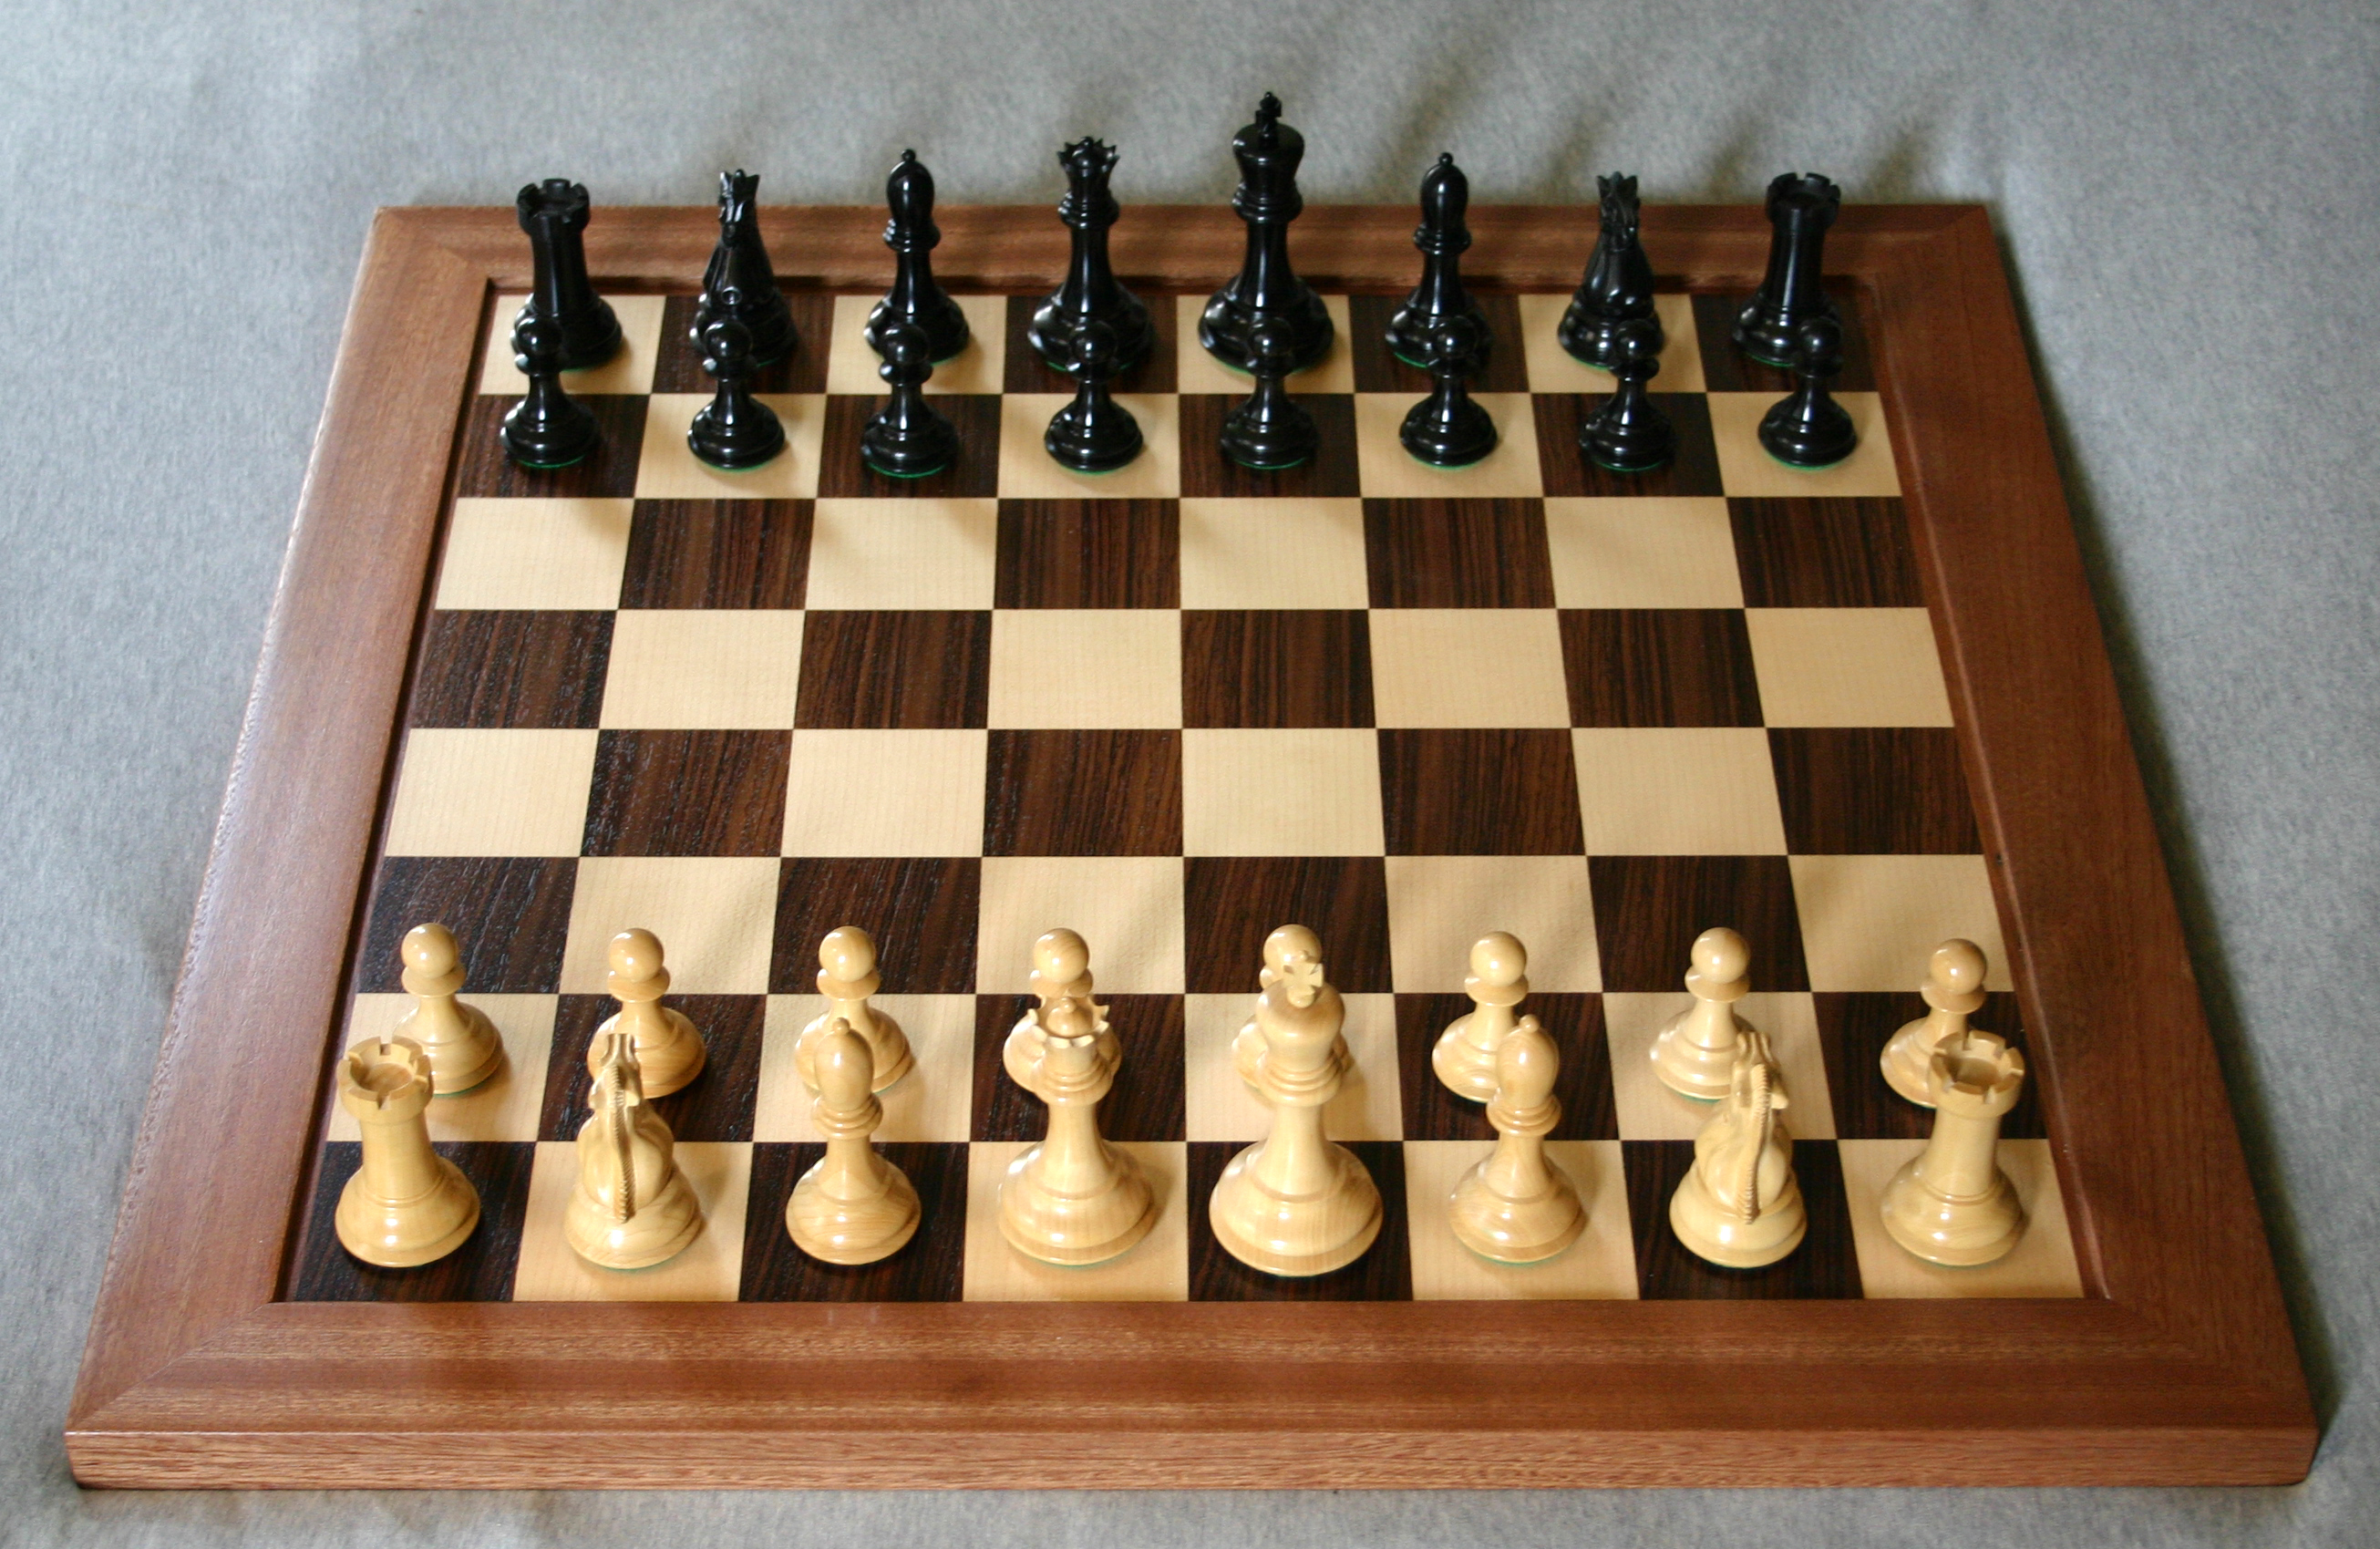 Alexander Alekhine, Wiki